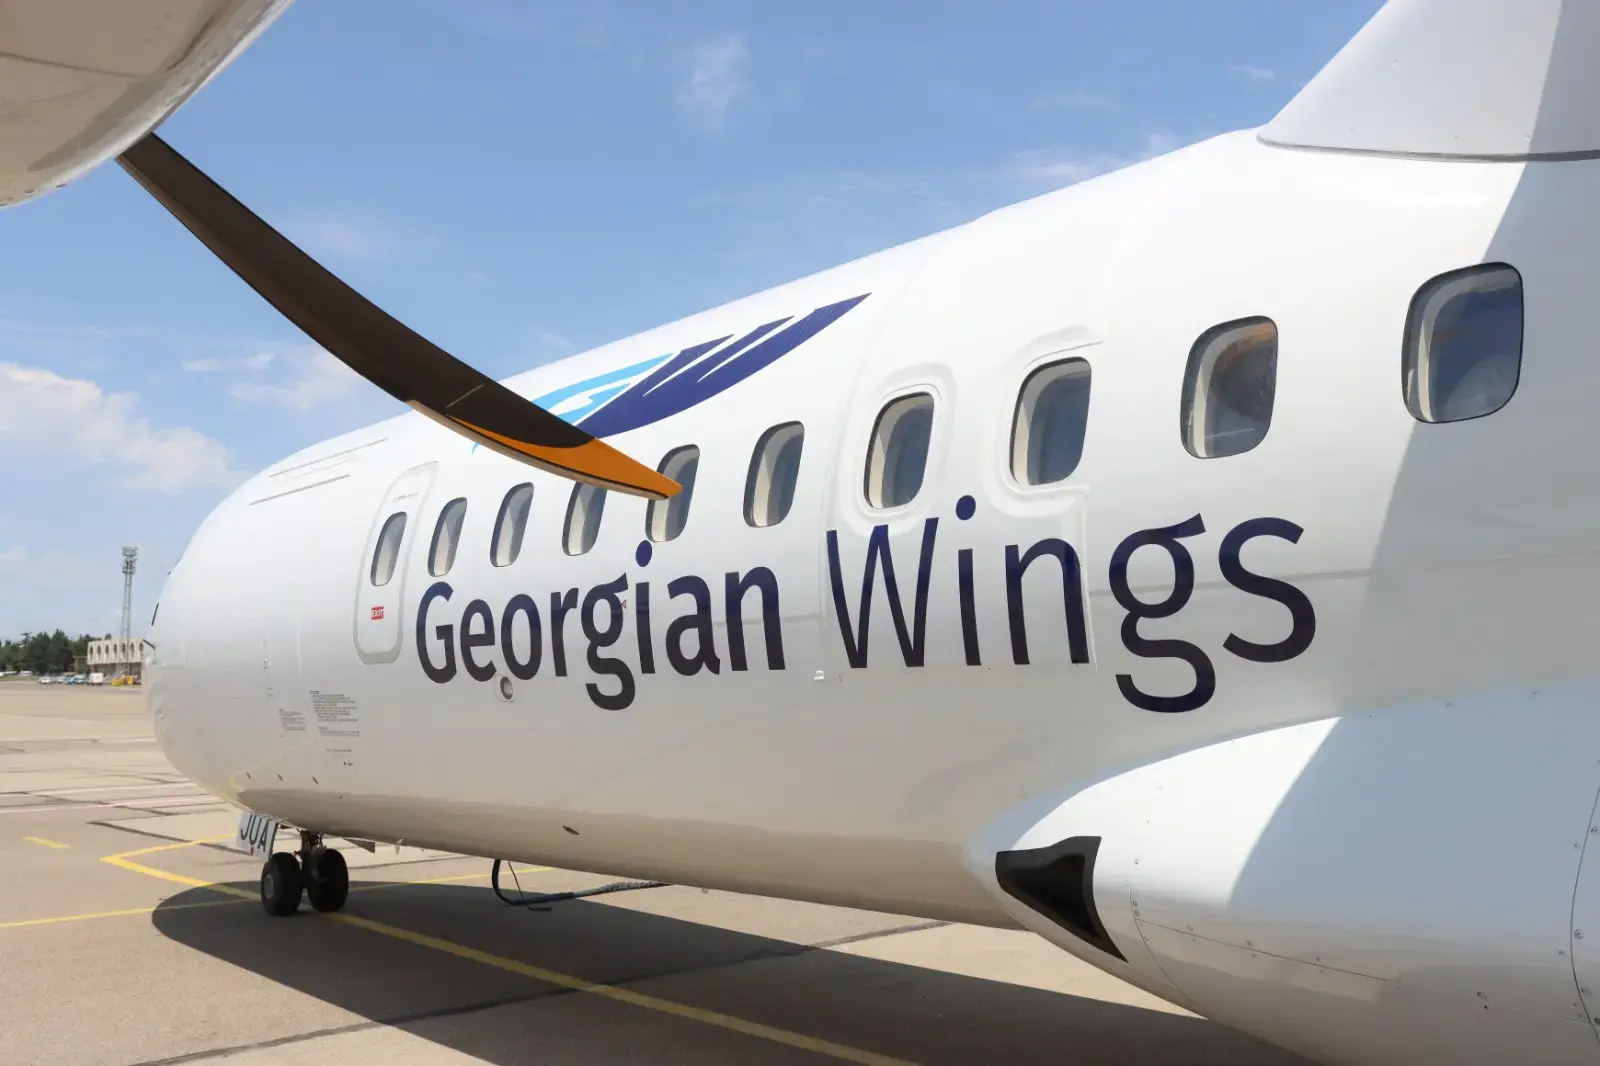 georgian wings